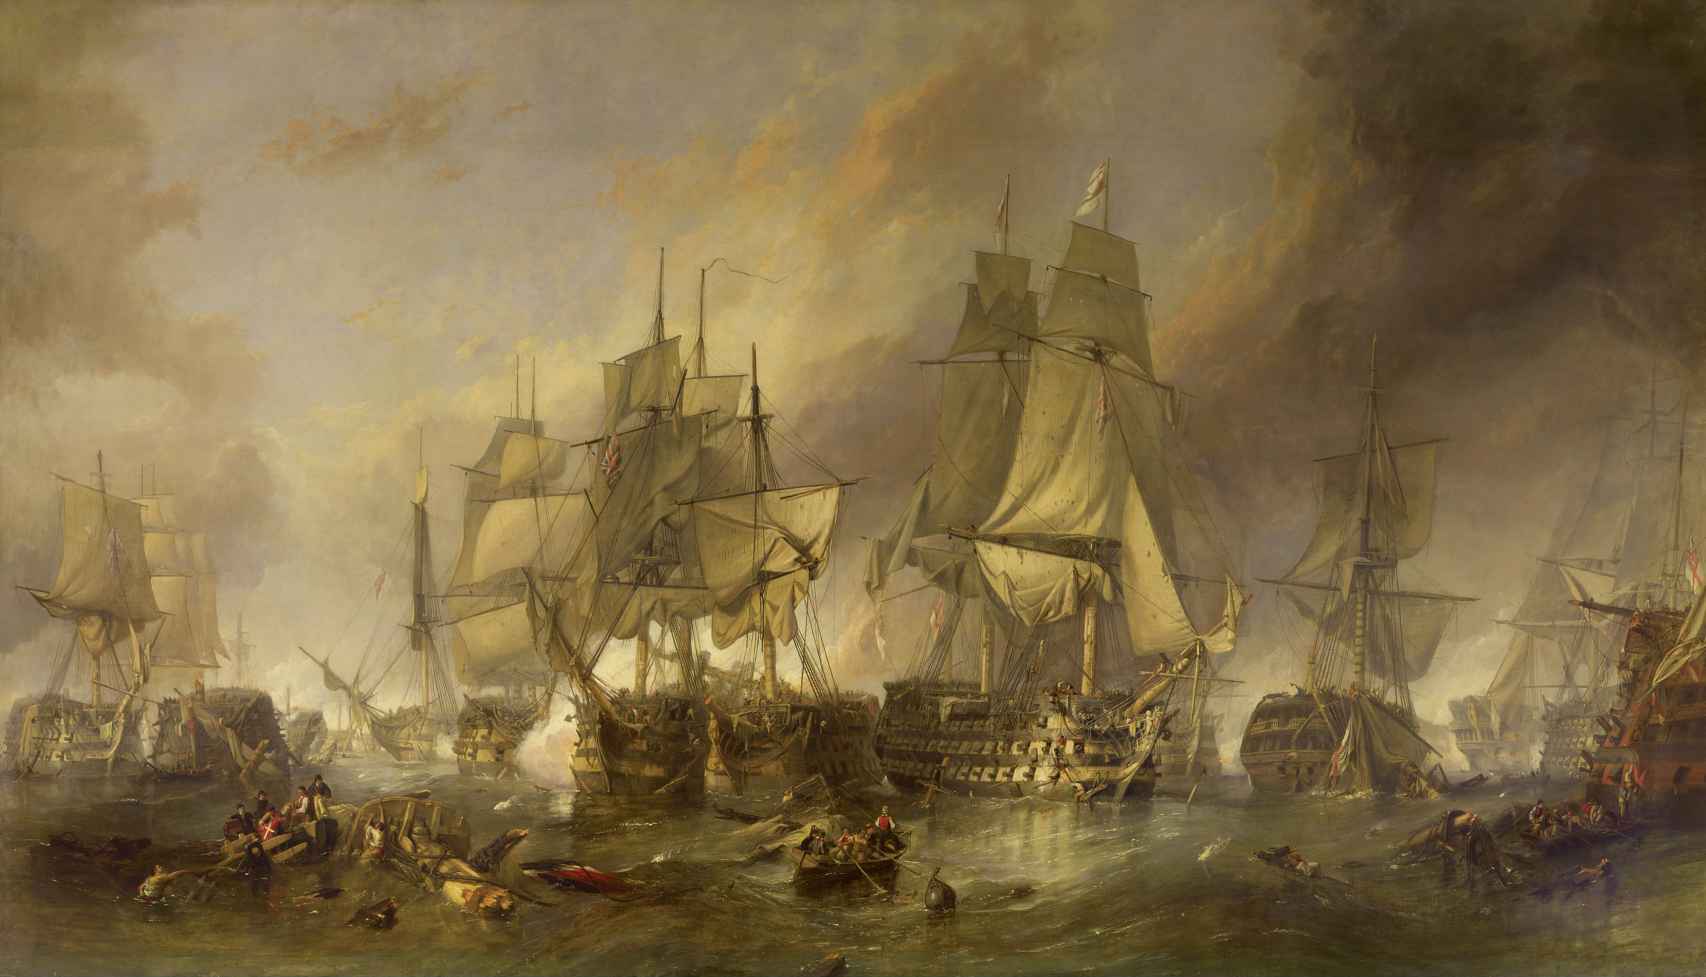 La batalla de Trafalgar, según William Clarkson Stanfield (1836).